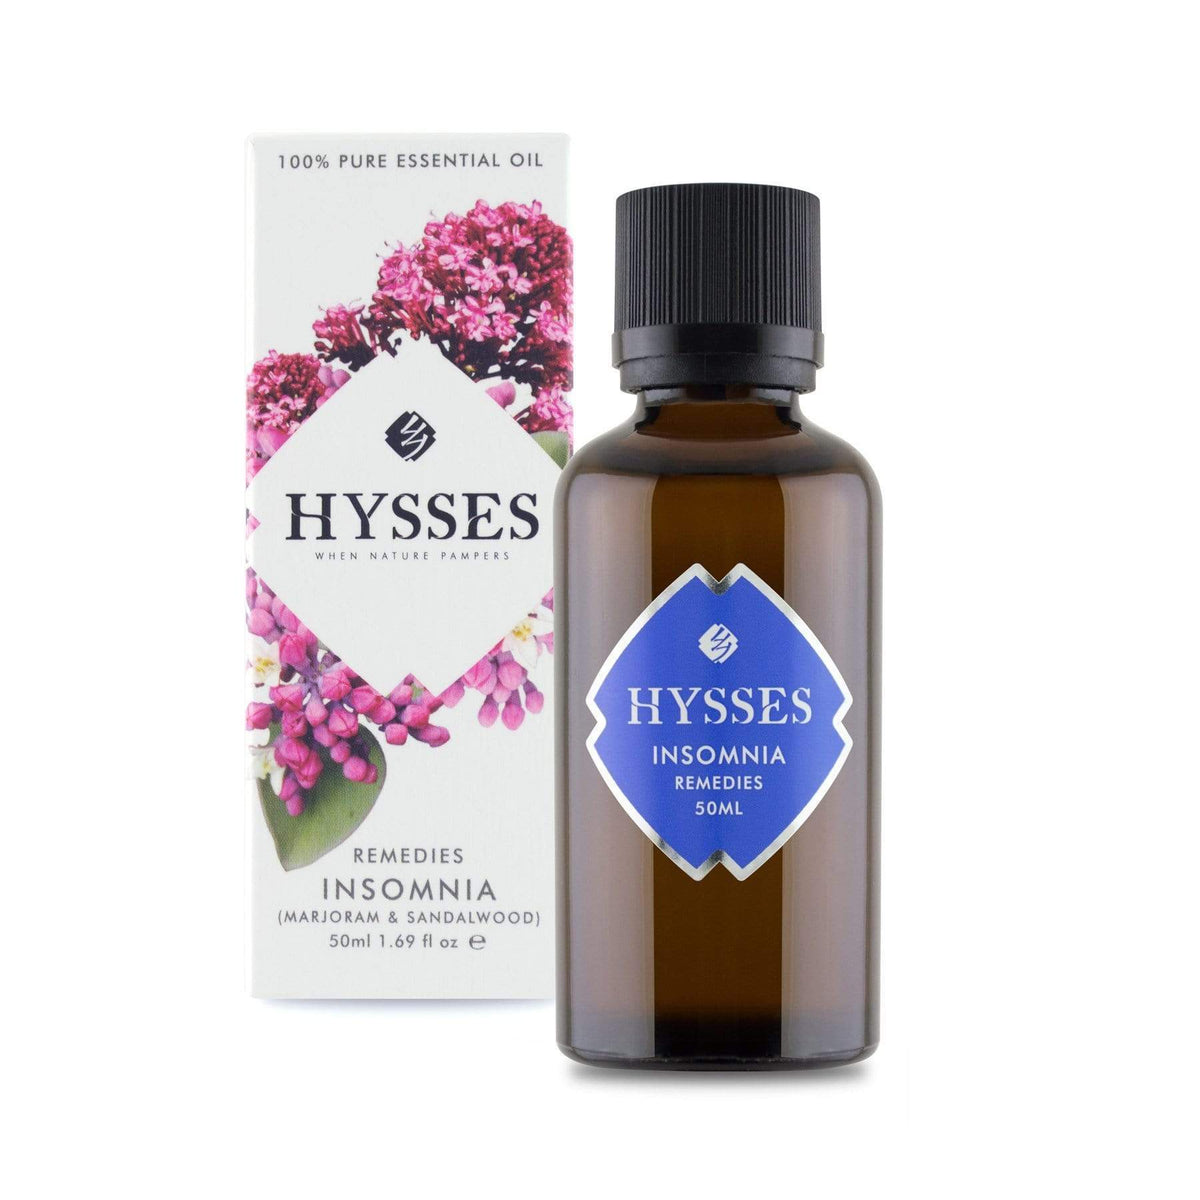 Hysses Essential Oil 50ml Remedies, Insomnia